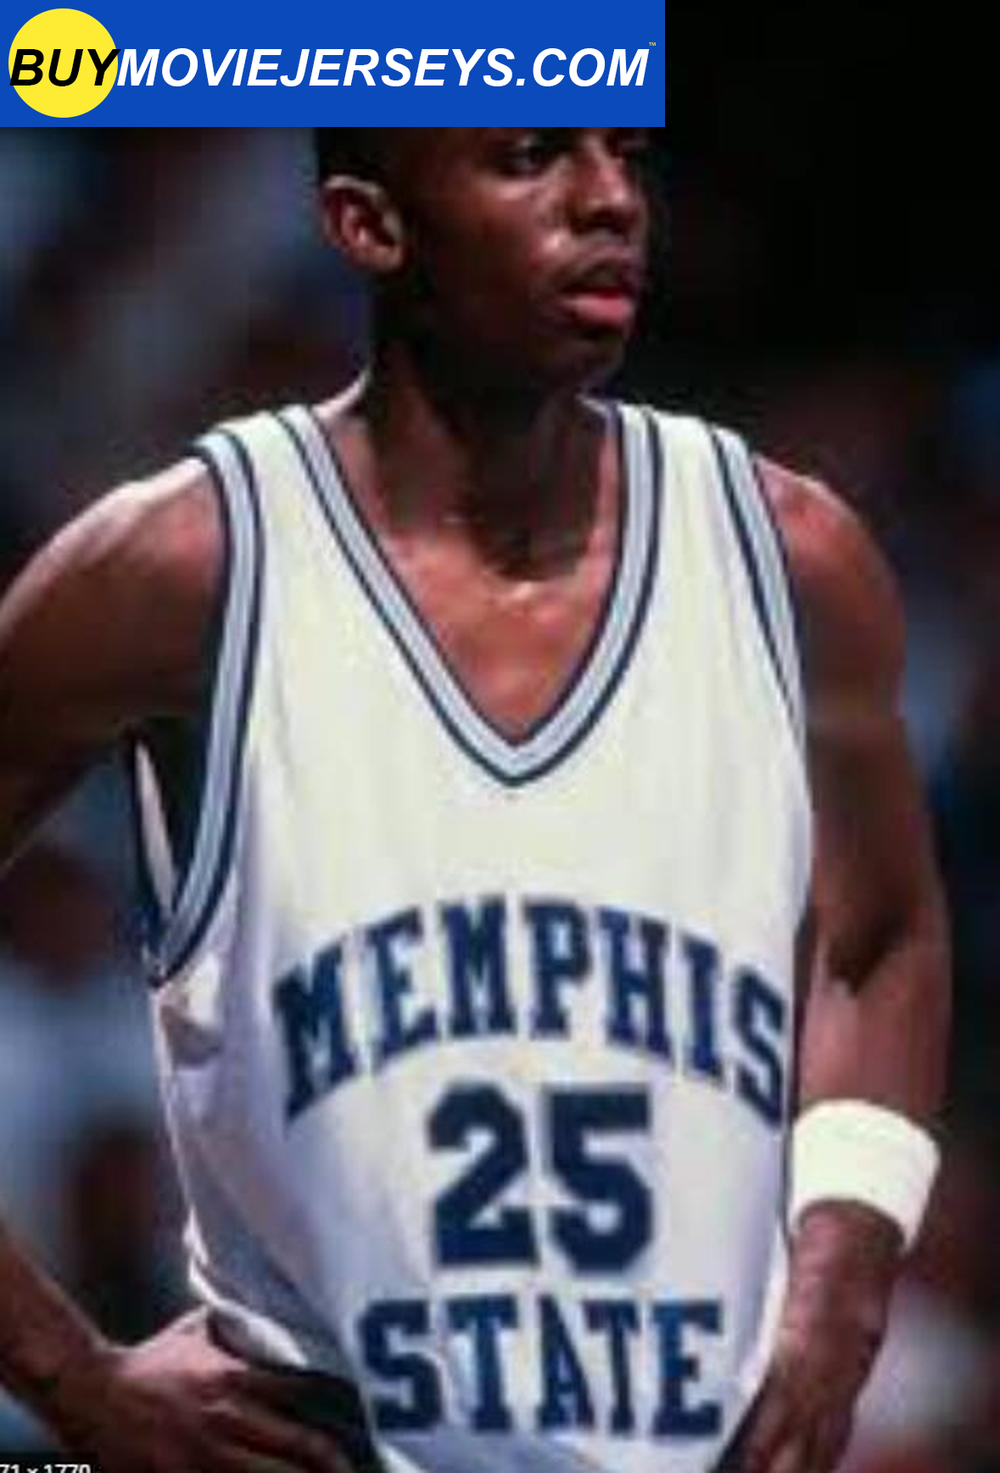 Nike Men's Memphis Tigers Penny Hardaway #25 Blue Replica